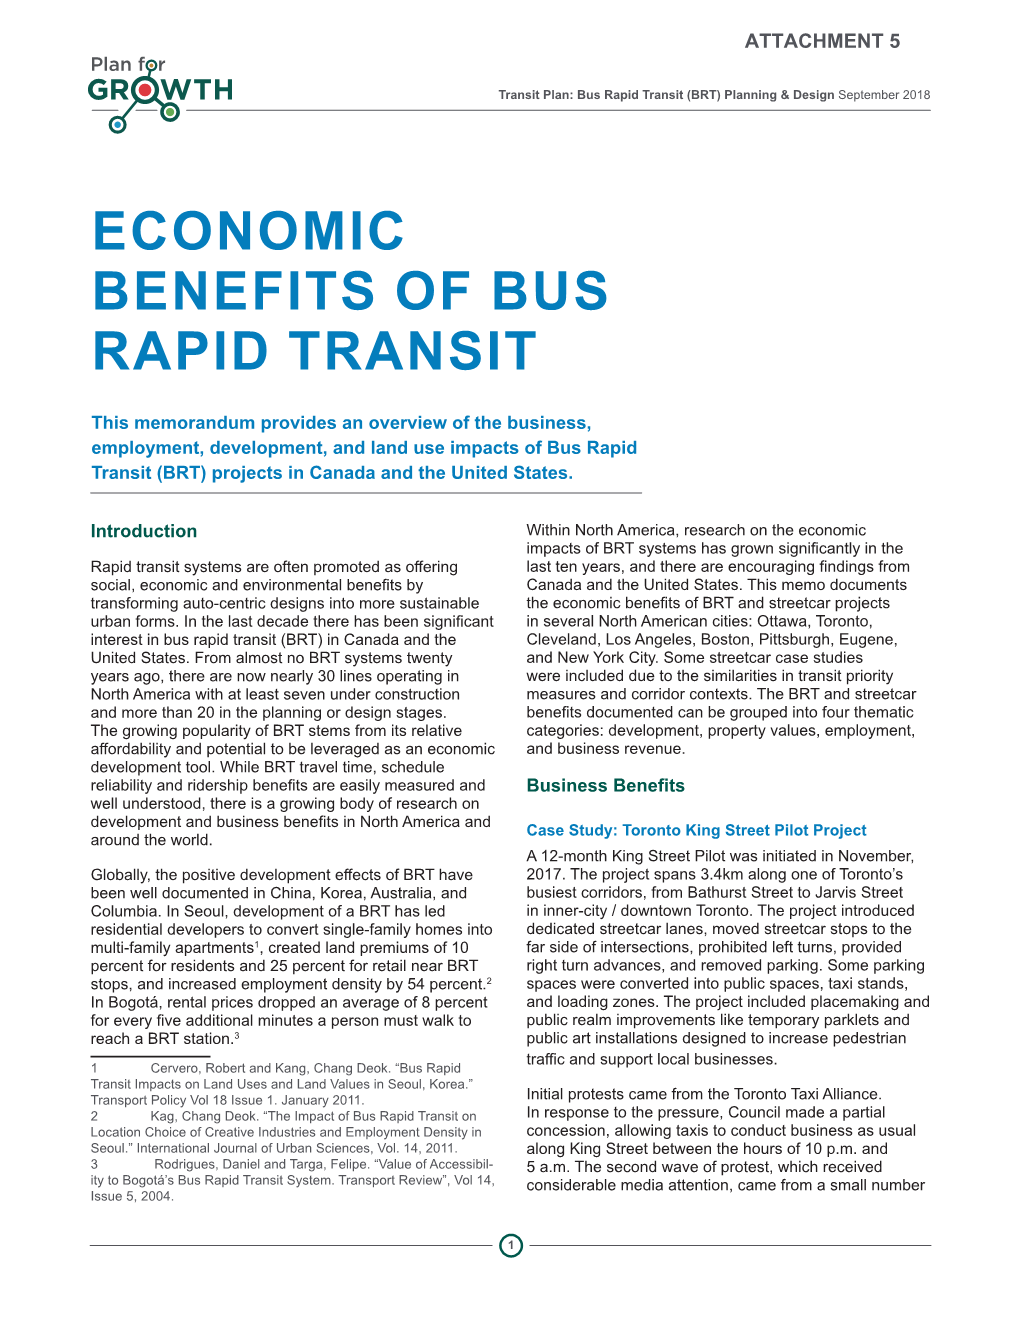 Economic Benefits of Bus Rapid Transit